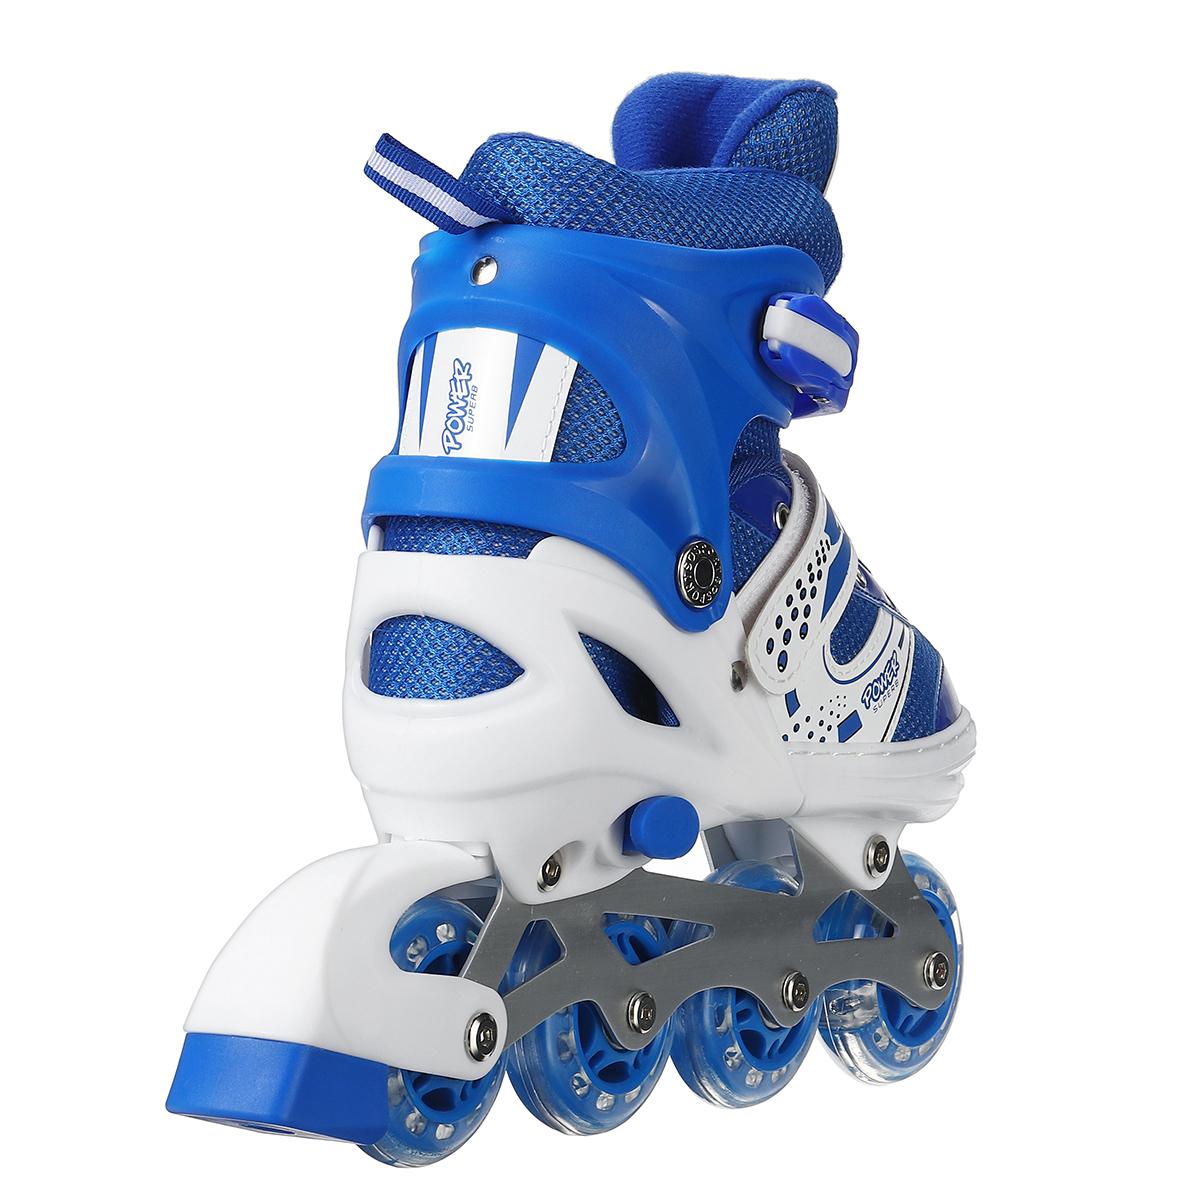 Childrens-Adjustable-Skates-Full-Set-Single-Flash-Ice-Skate-Shoes-for-Boys-and-Girls-Inline-Skates-f-1697070-12